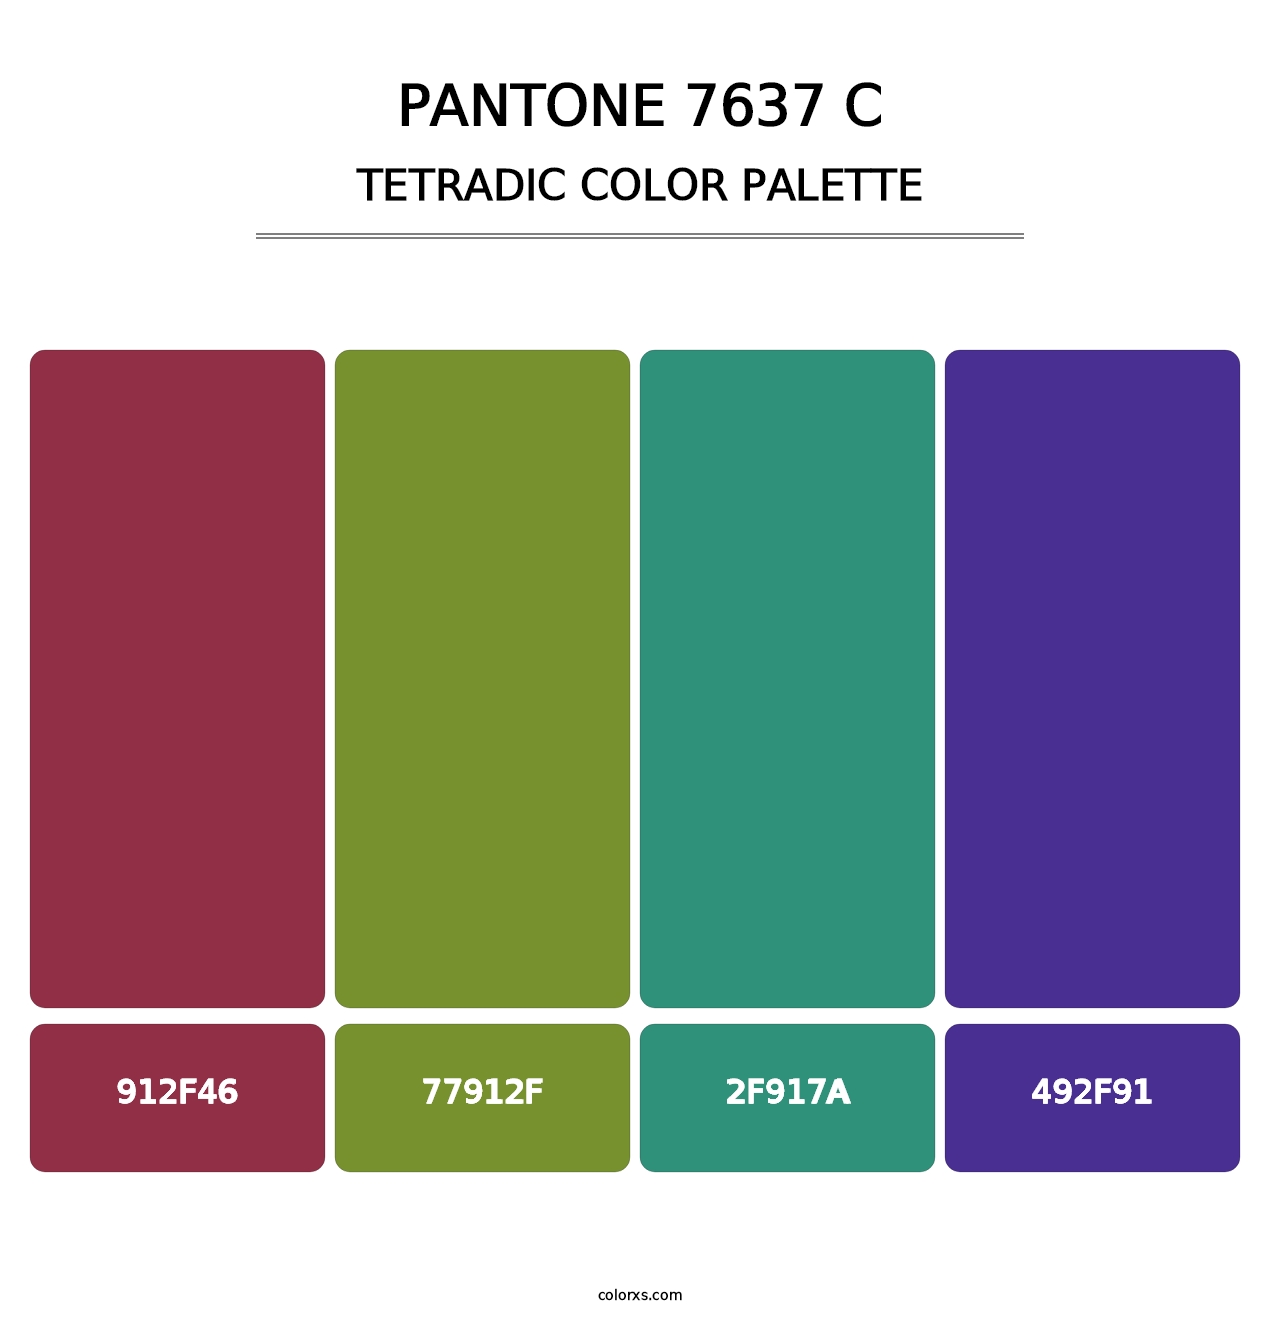 PANTONE 7637 C - Tetradic Color Palette